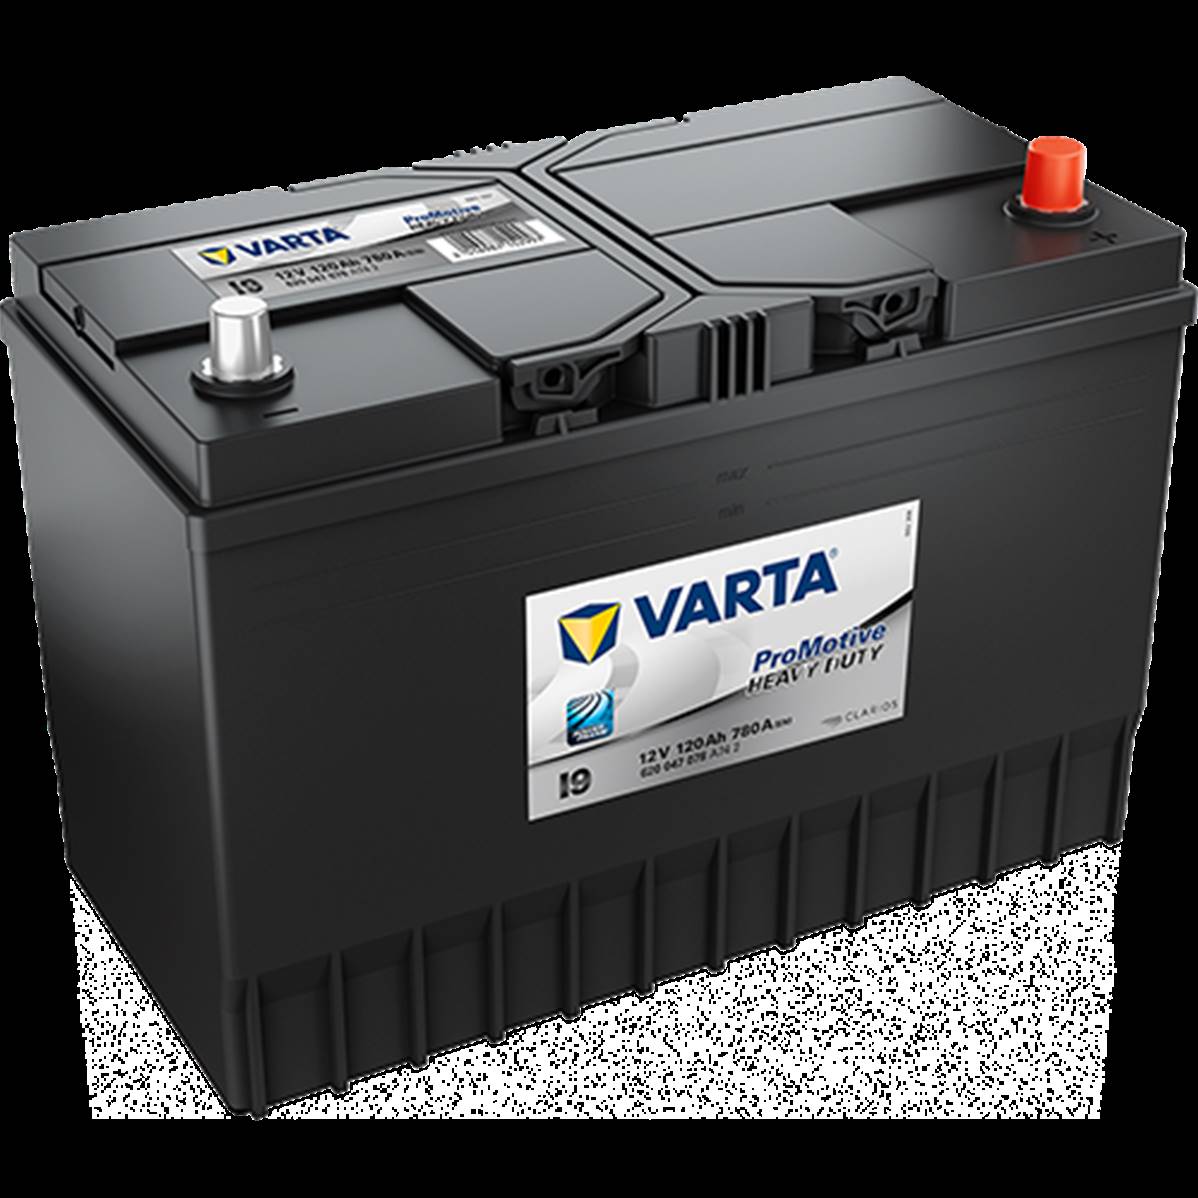 Batterie PL/Agri I9 12v 120ah 780A Varta Black promotive - Achat